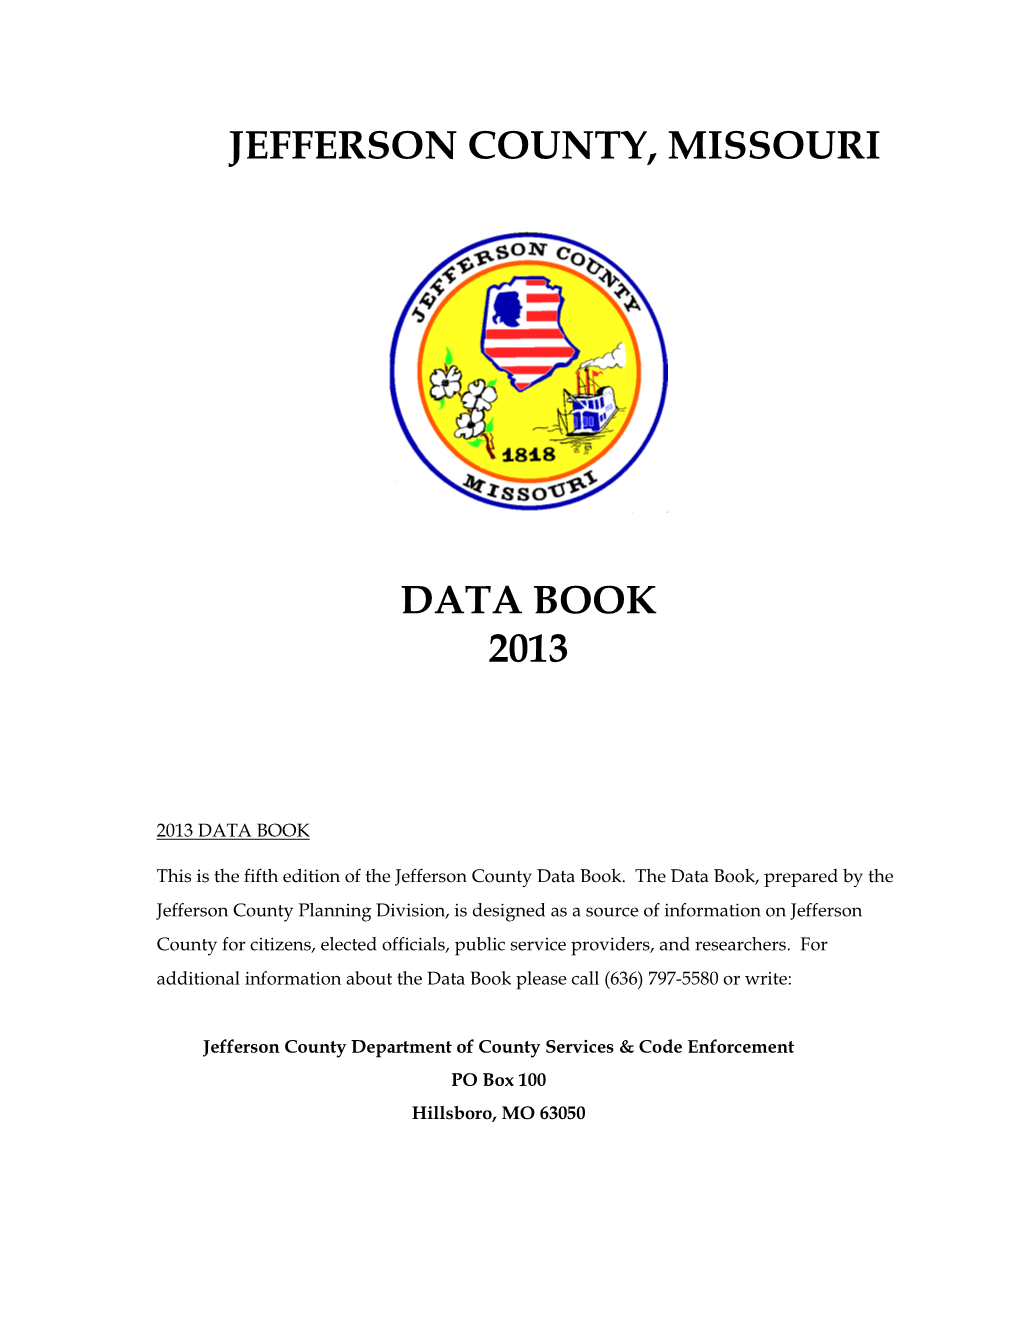 Jefferson County, Missouri Data Book 2013